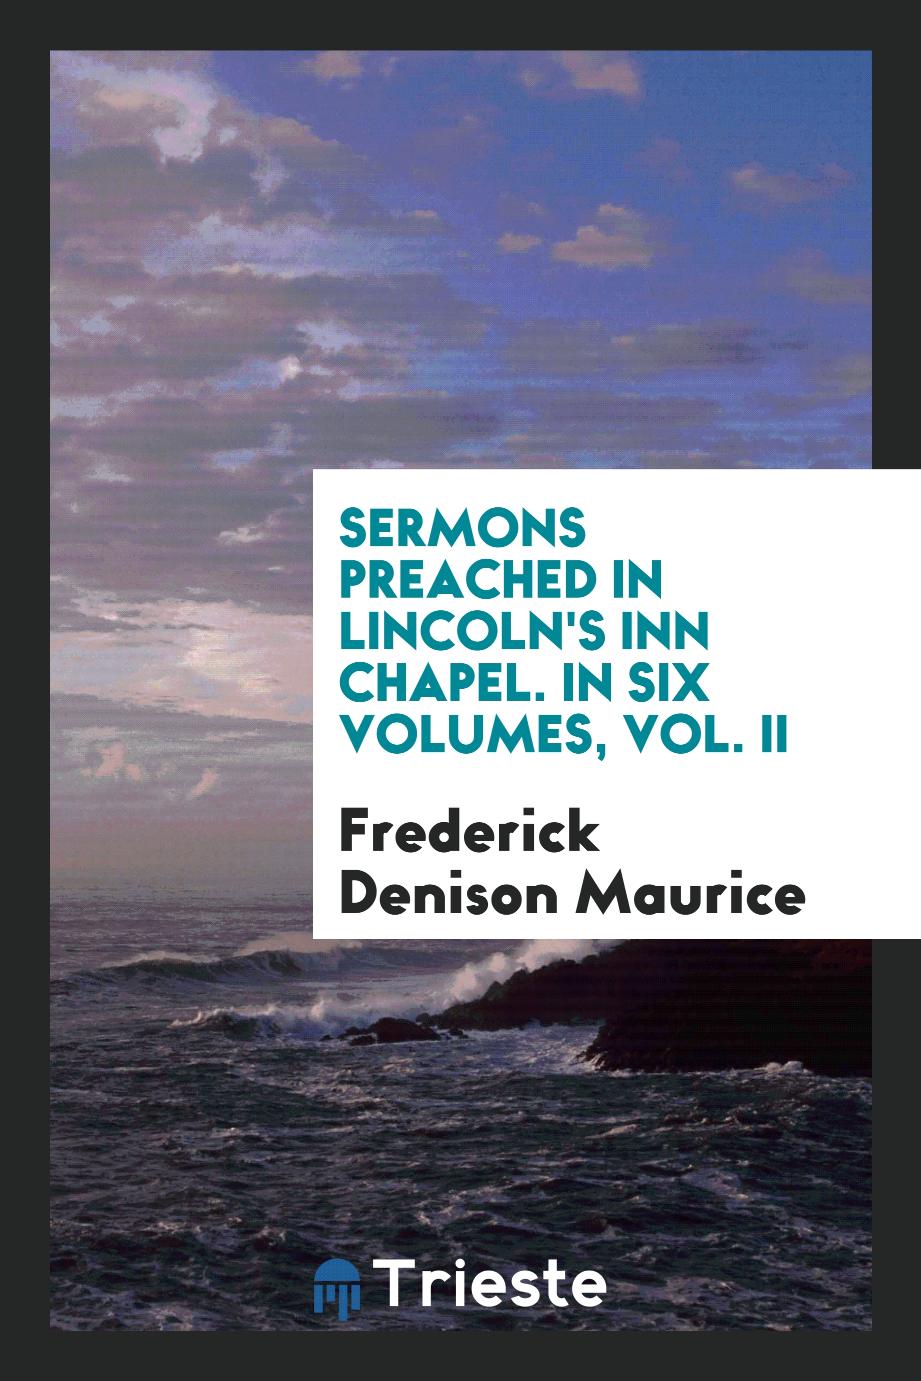 Sermons Preached in Lincoln's Inn Chapel. In Six Volumes, Vol. II